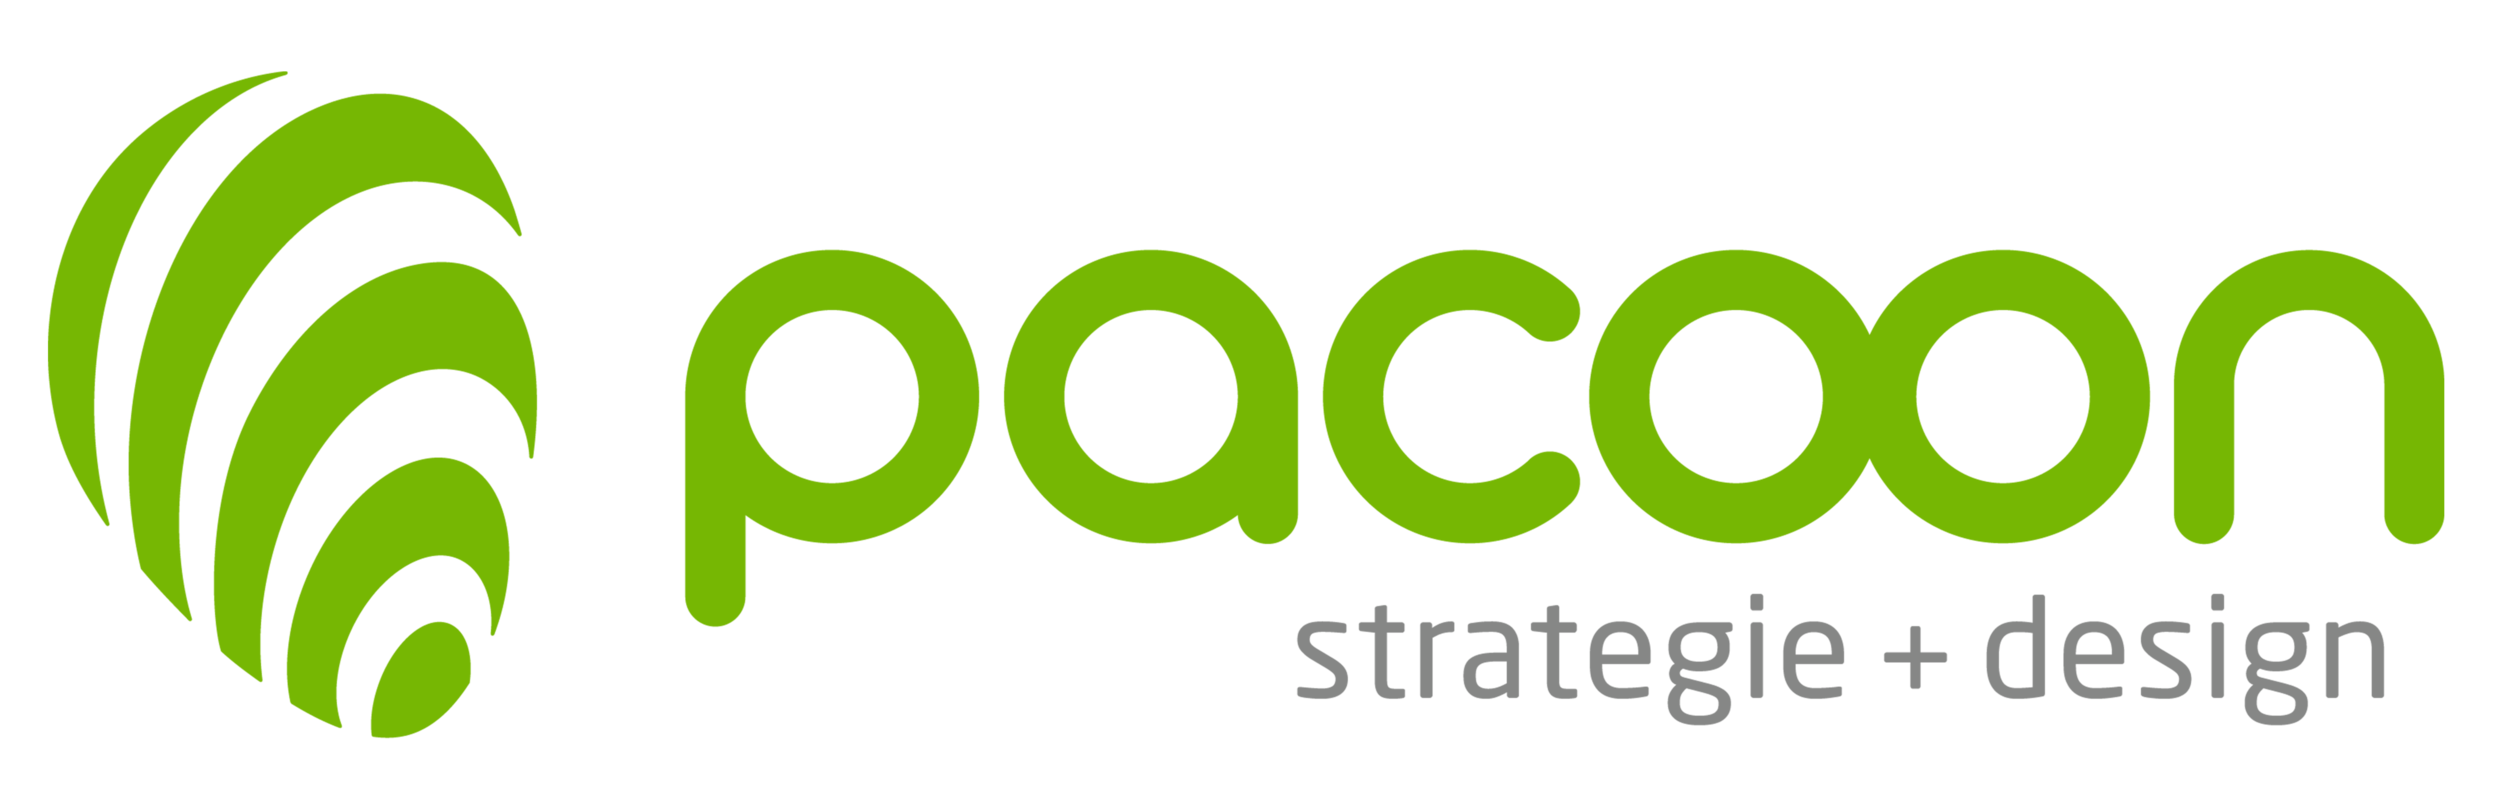 pacoon_logo+claim_green_transparent.png